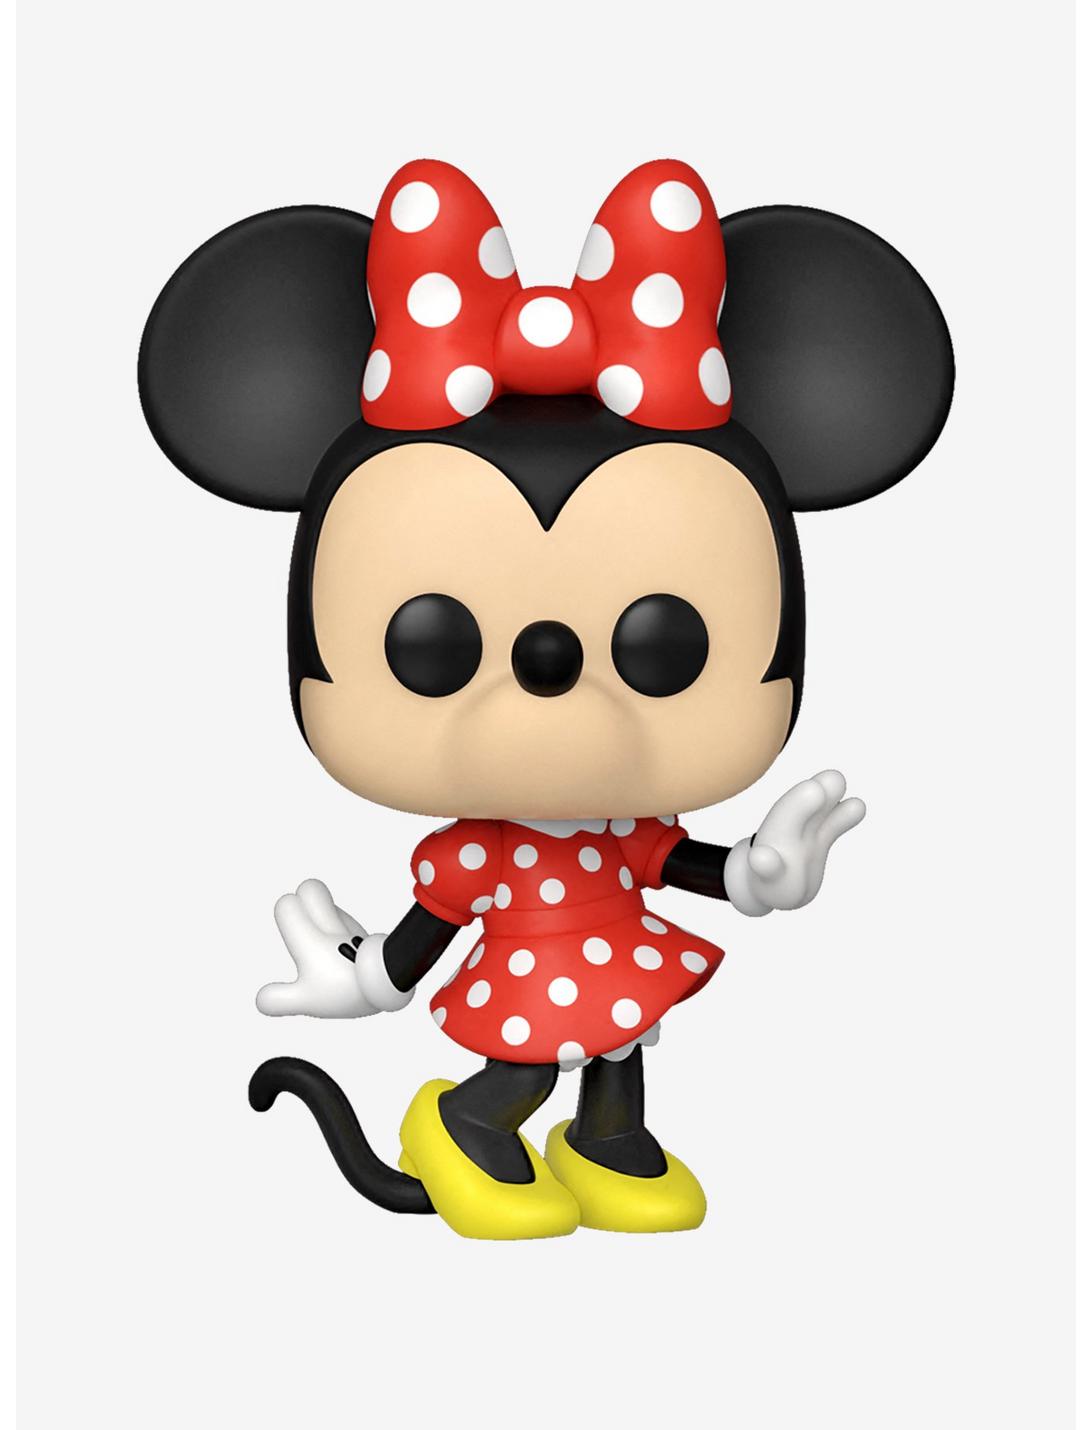 Funko Pop! Disney Mickey and Friends Minnie Mouse Vinyl Figure, , hi-res